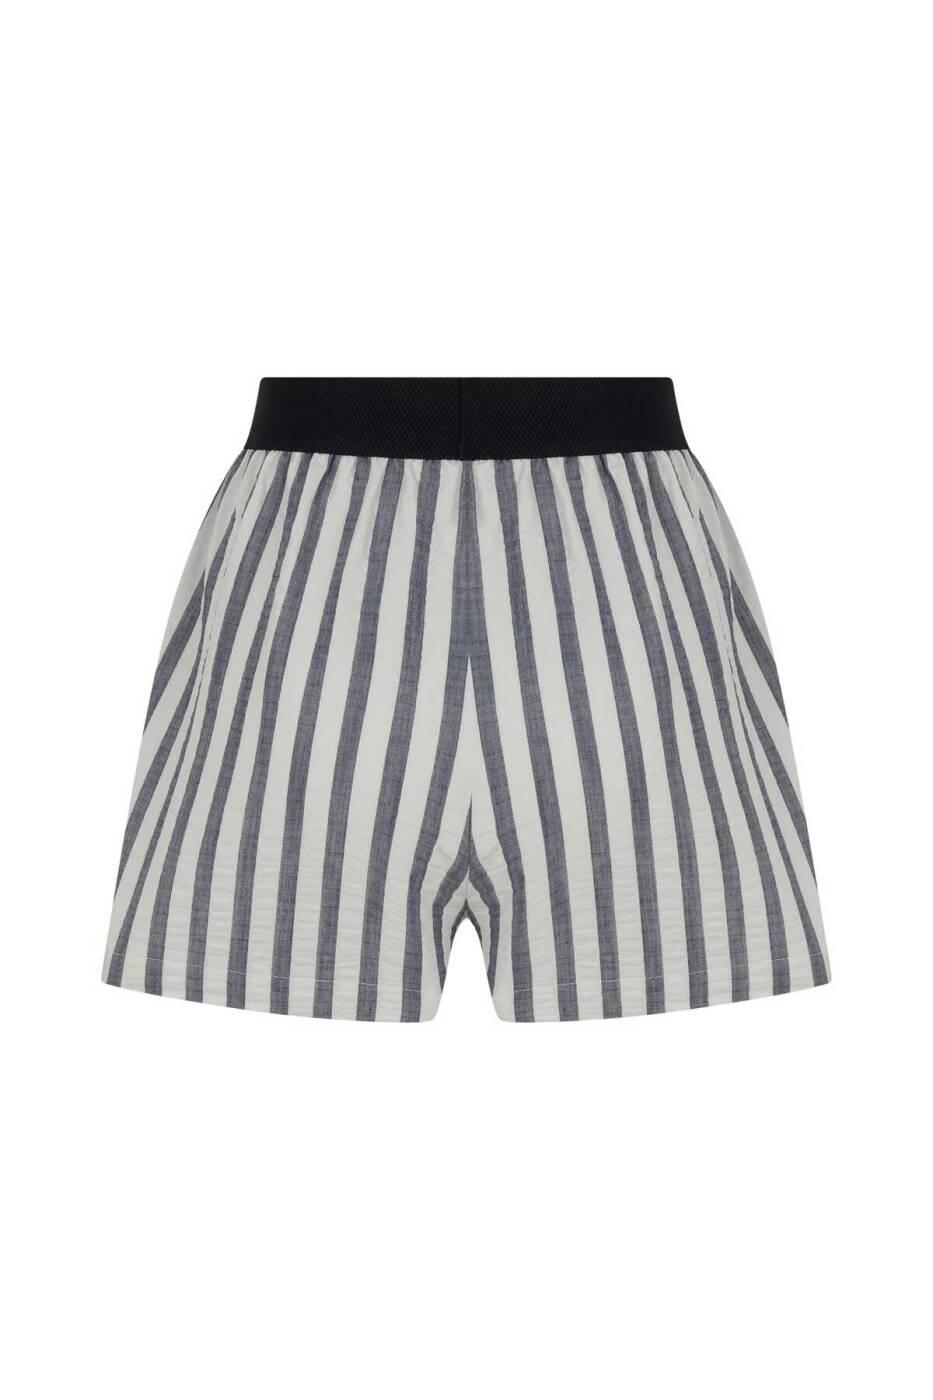 Women's Striped Elastic Waist Shorts Original